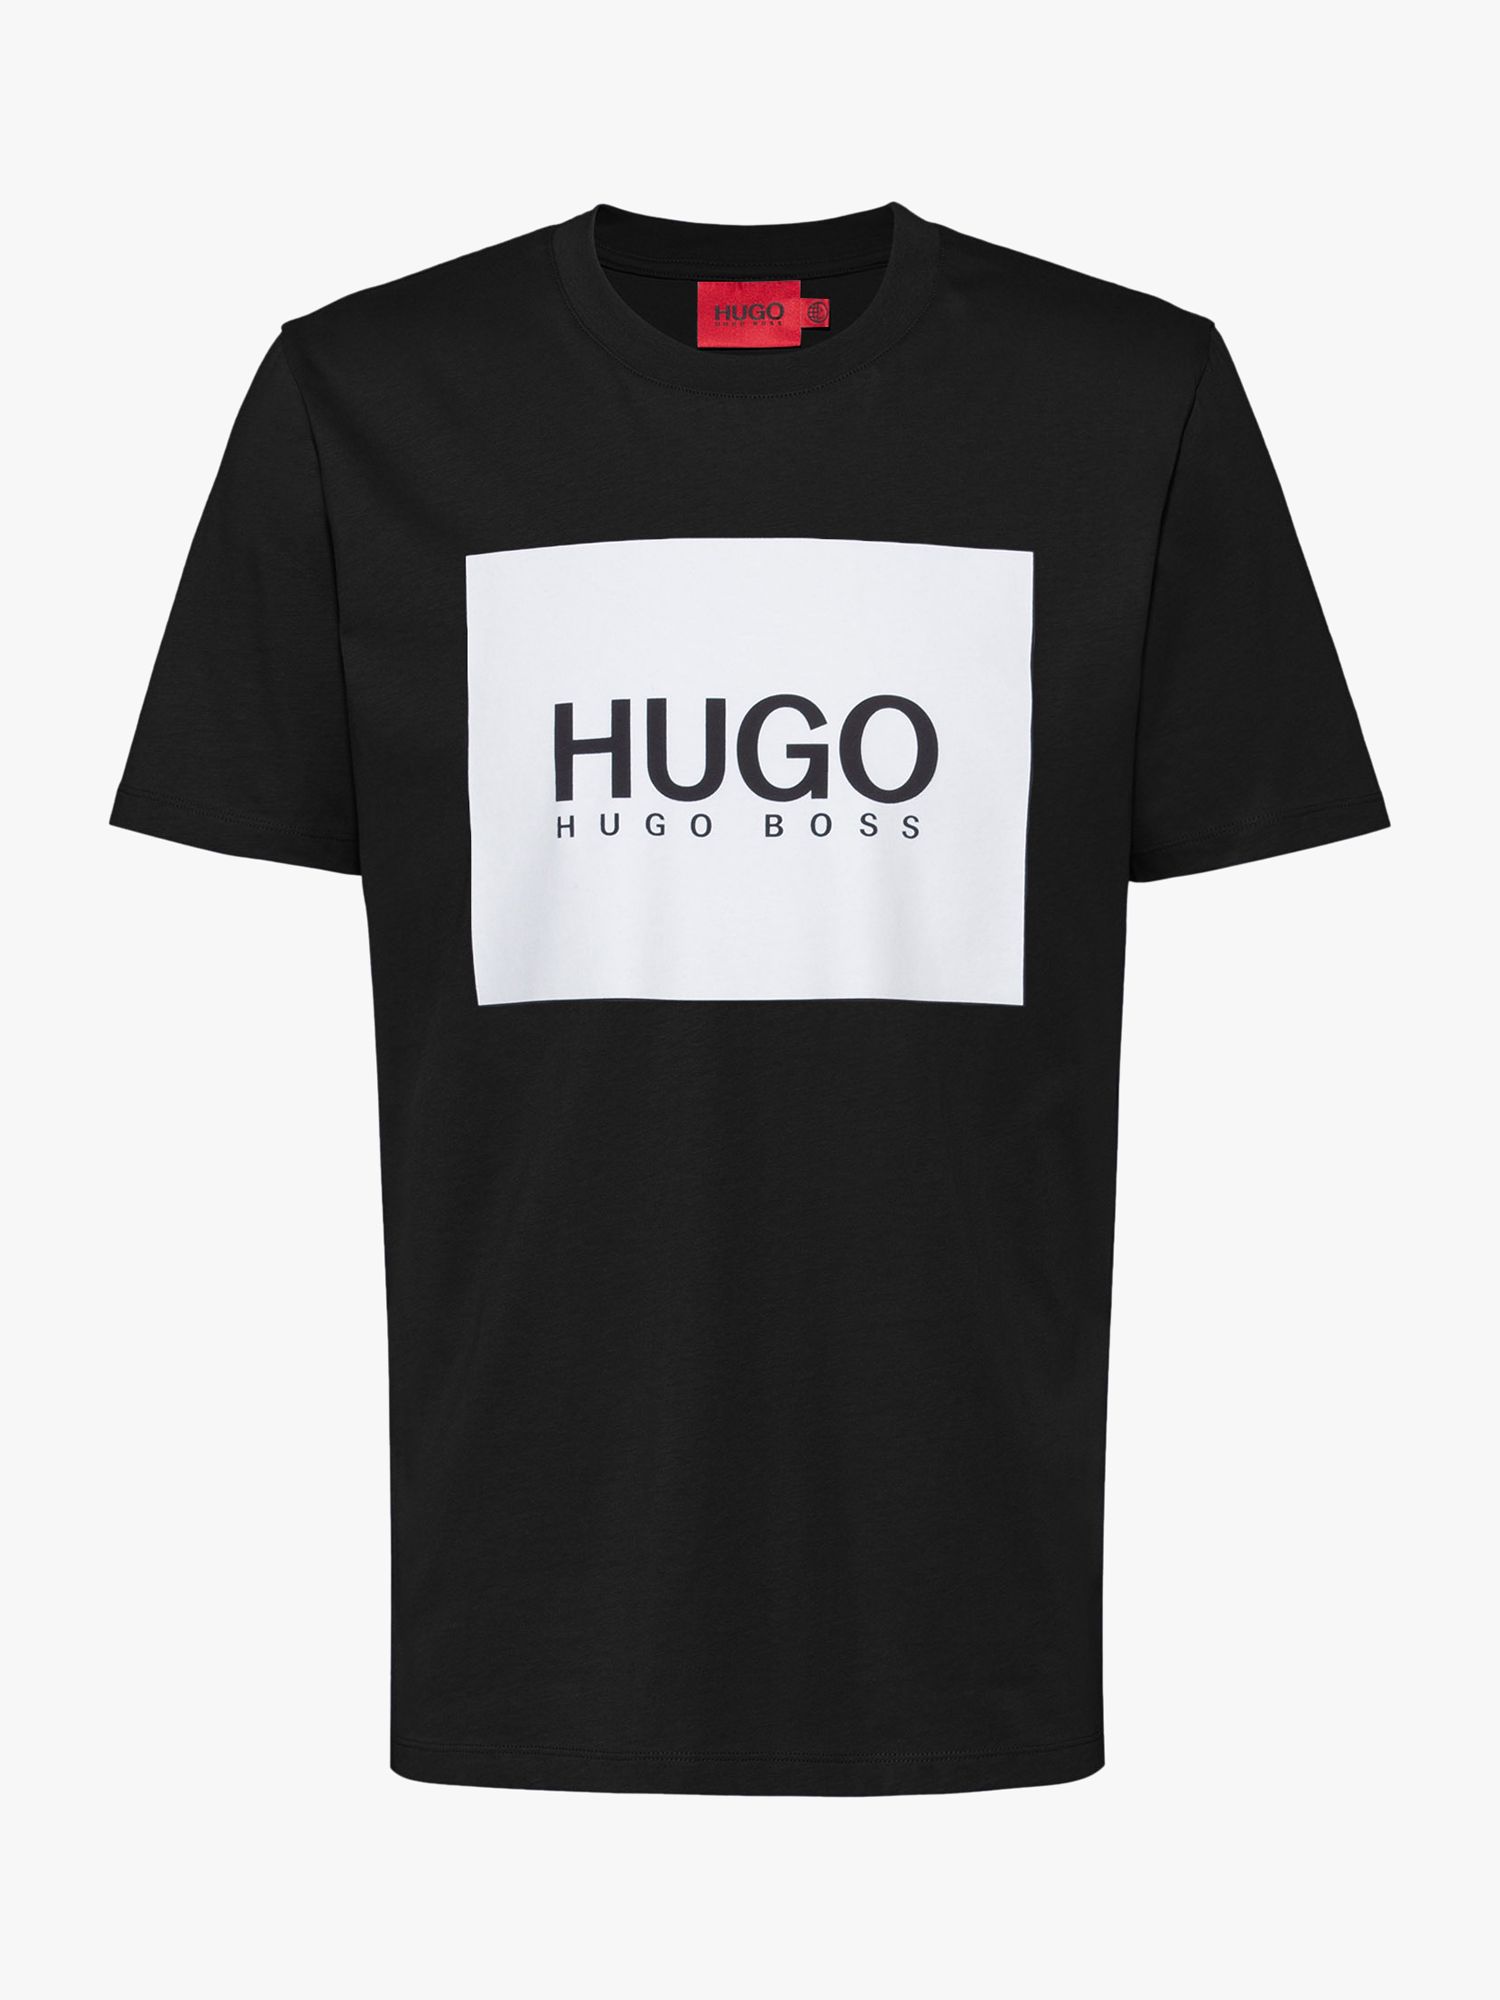 HUGO BOSS | Men's T-Shirts | John Lewis 